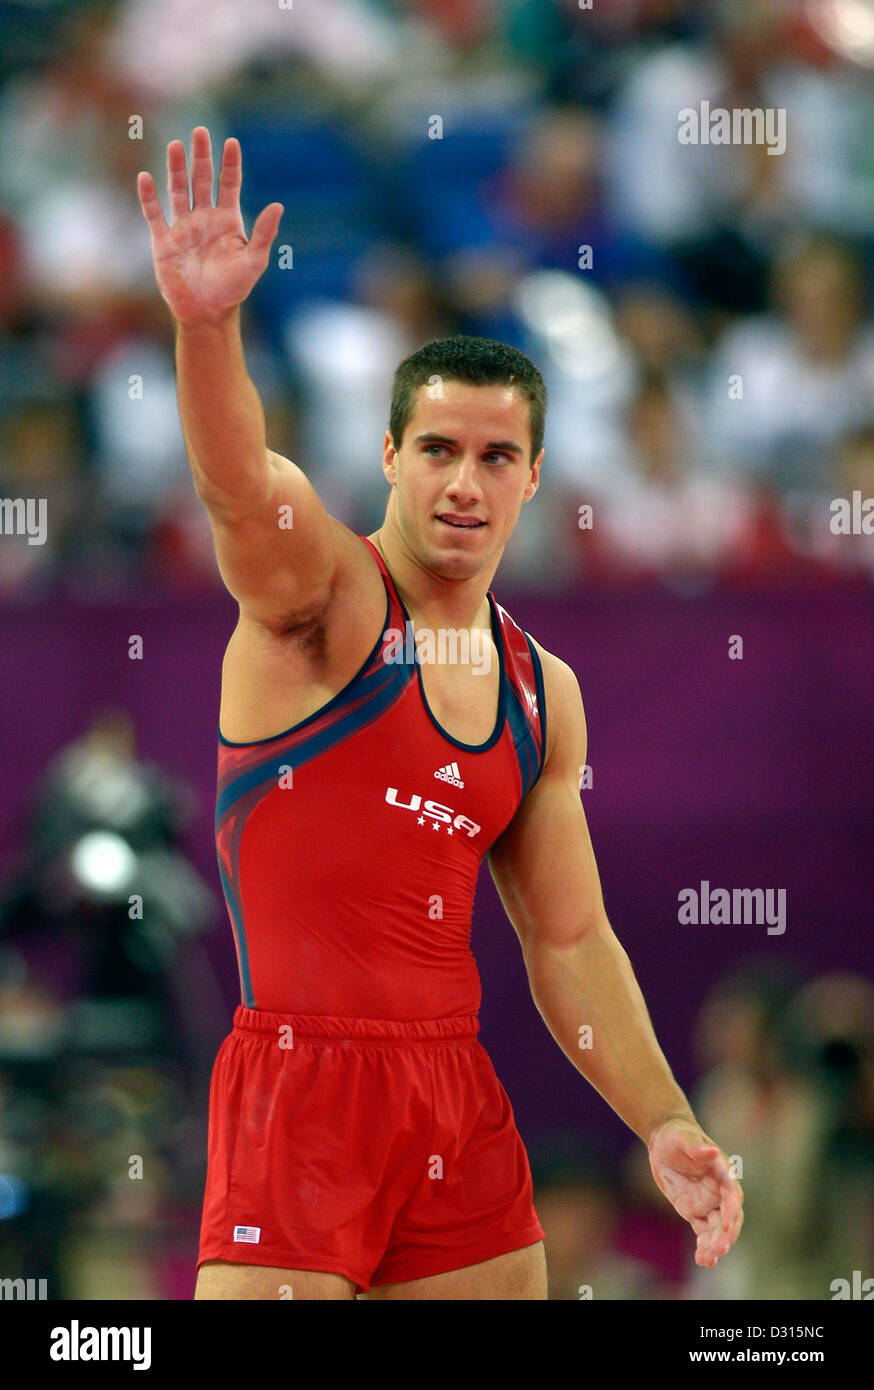 Jacob Dalton (USA, United States of America). Gymnastique individuelle Banque D'Images